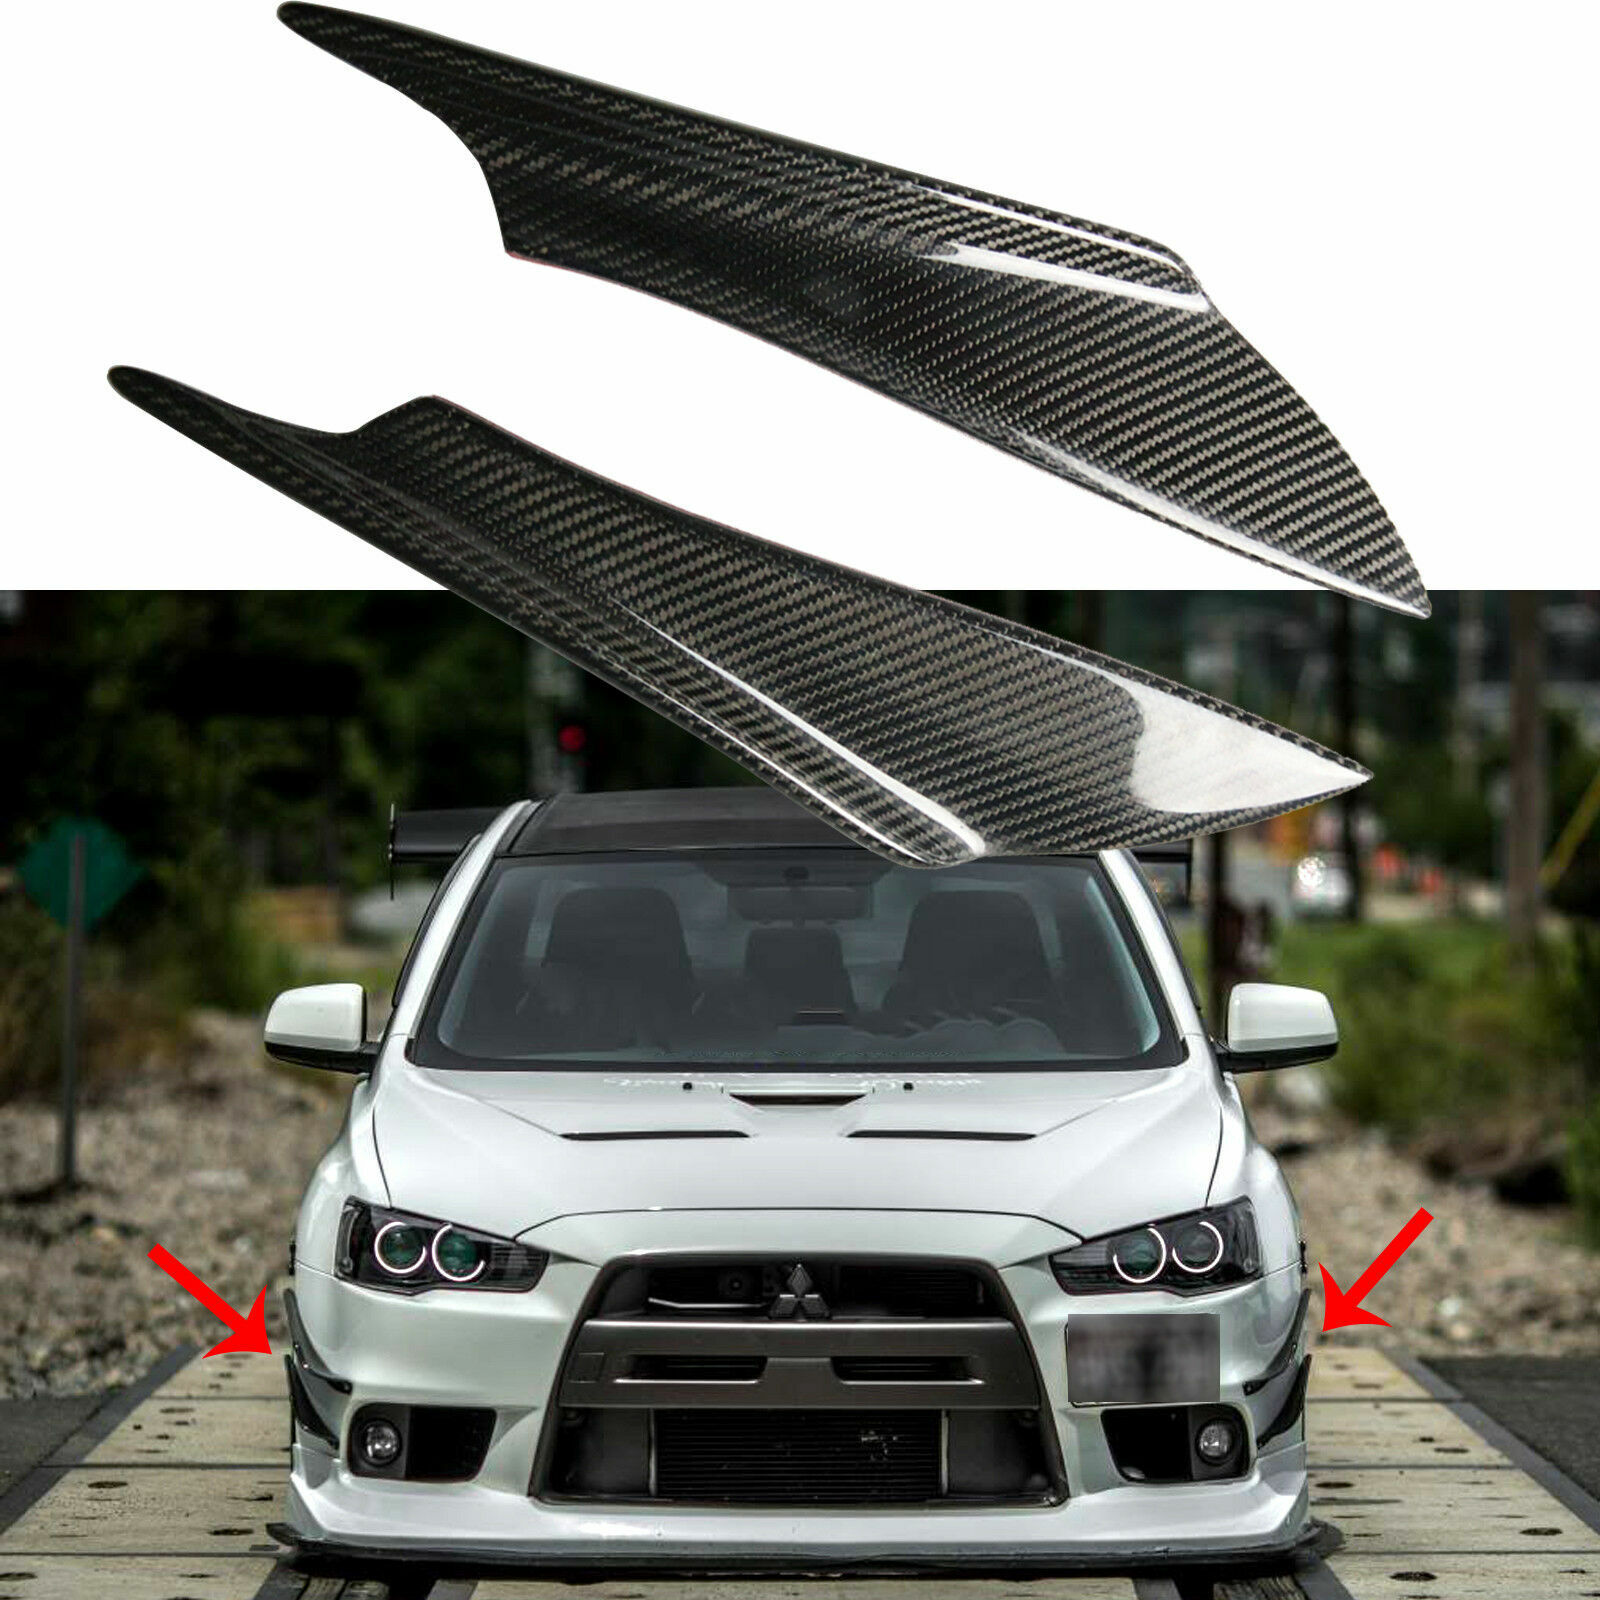 2PCS Carbon Fiber Front Bumper Canards Splitters for Mitsubishi Lancer EVO X 10